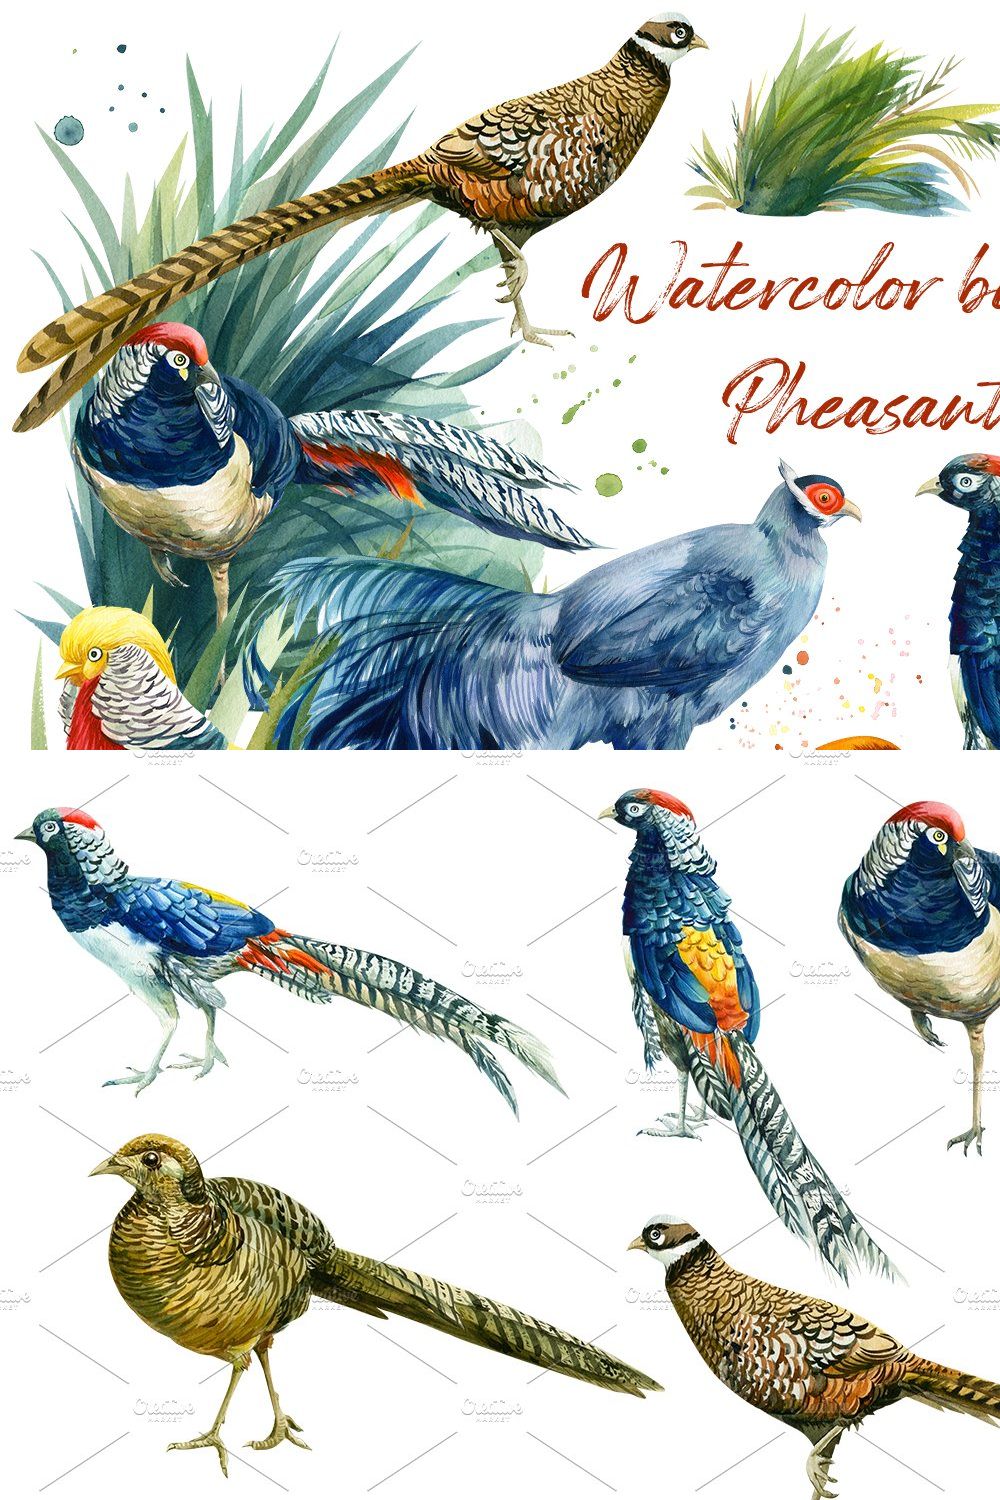 Watercolor birds, pheasant pinterest preview image.